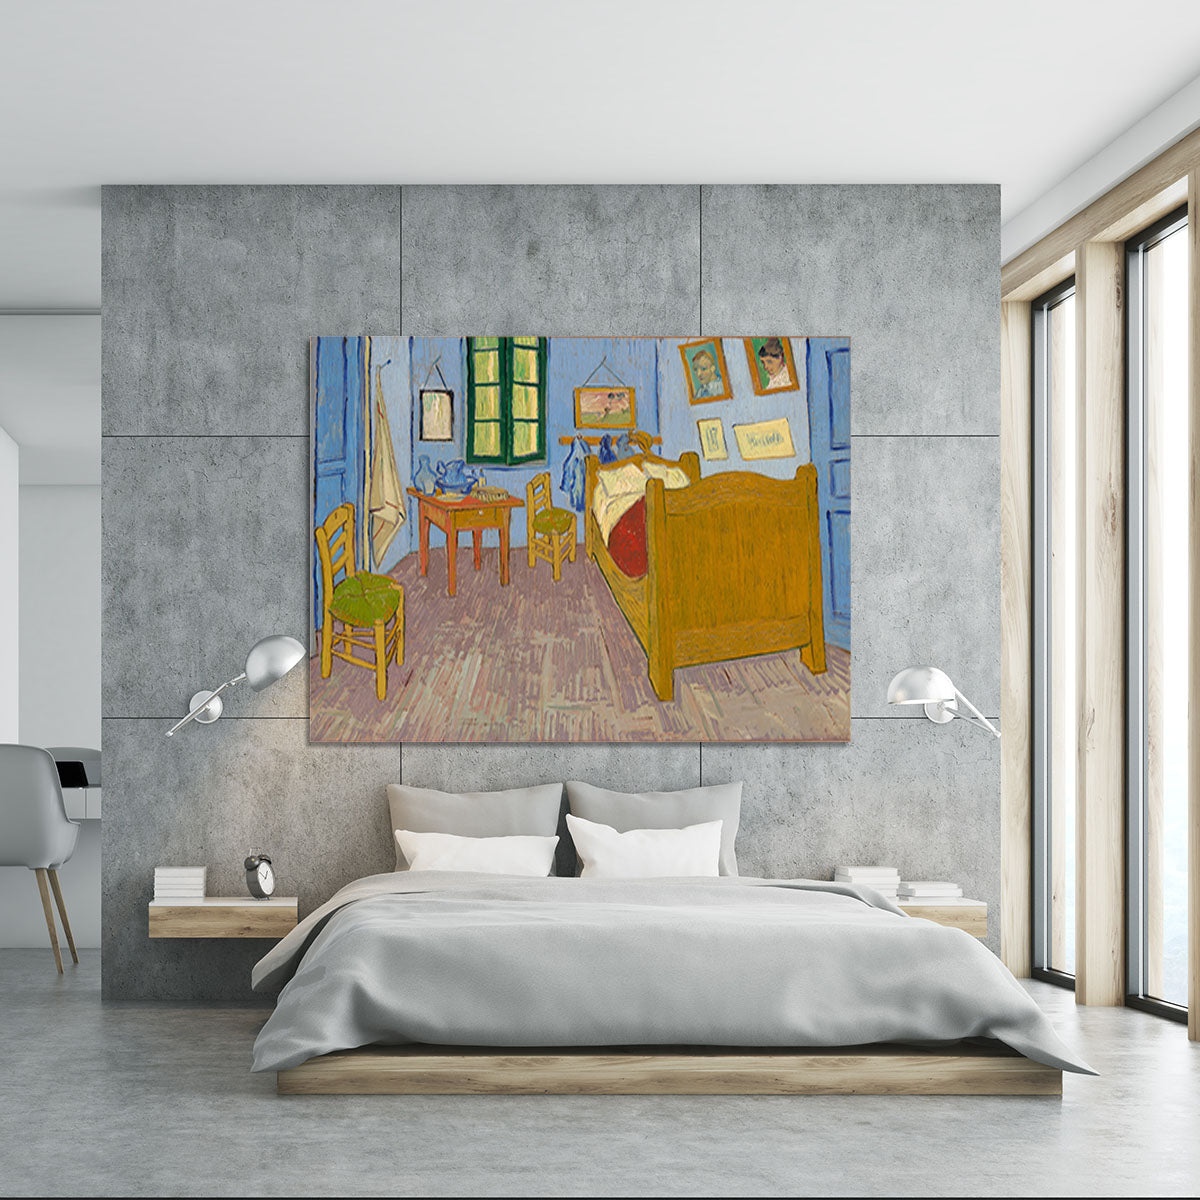 Vincents bedroom at Arles Canvas Print or Poster - Canvas Art Rocks - 5